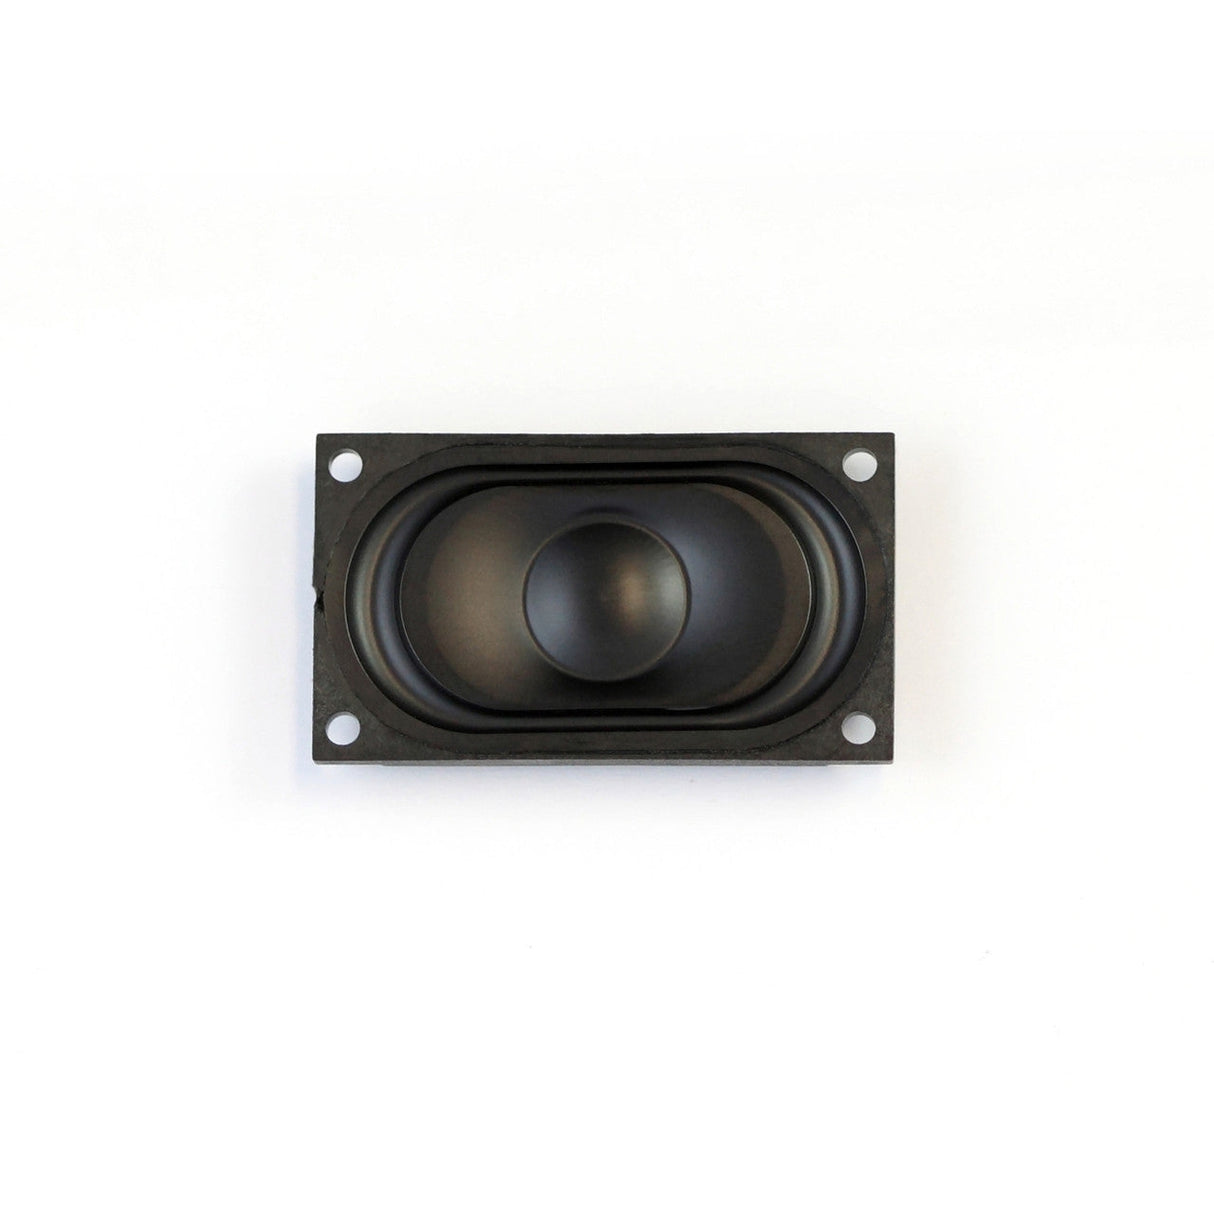 Soundtraxx 35 x 20mm oval, 8-ohm speaker